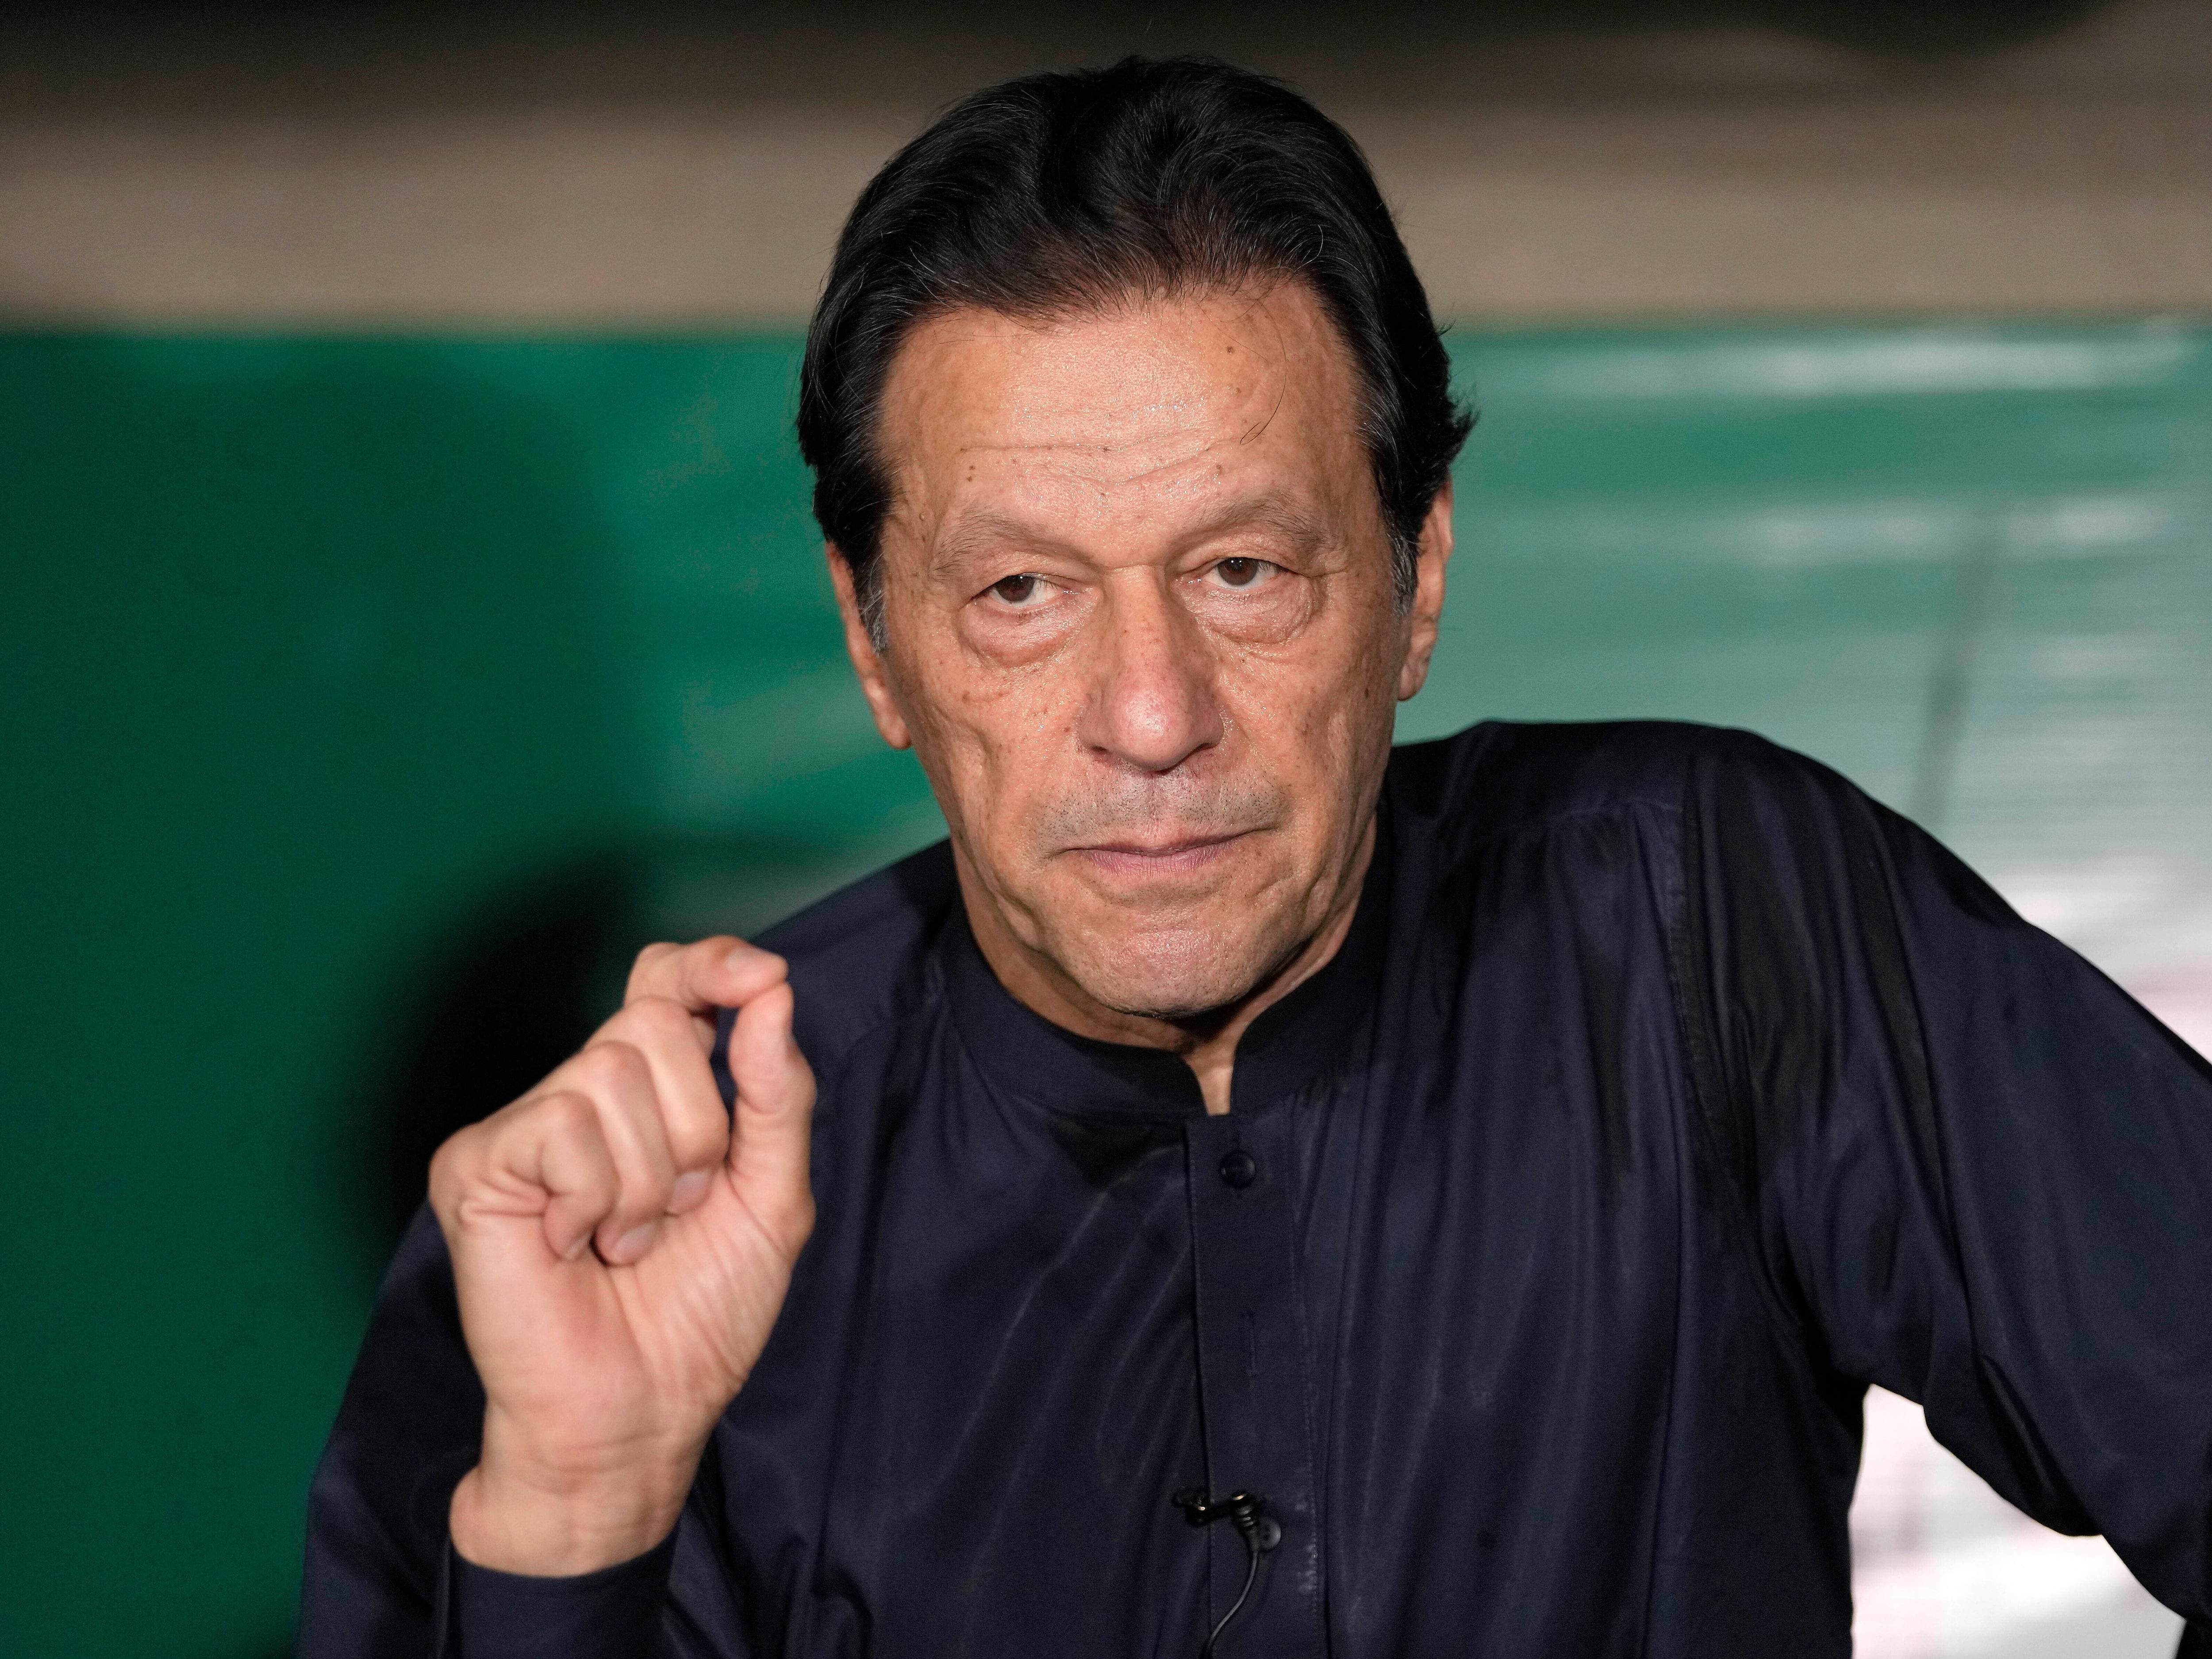 Pakistan police raid former PM Imran Khan’s party office and arrest spokesman